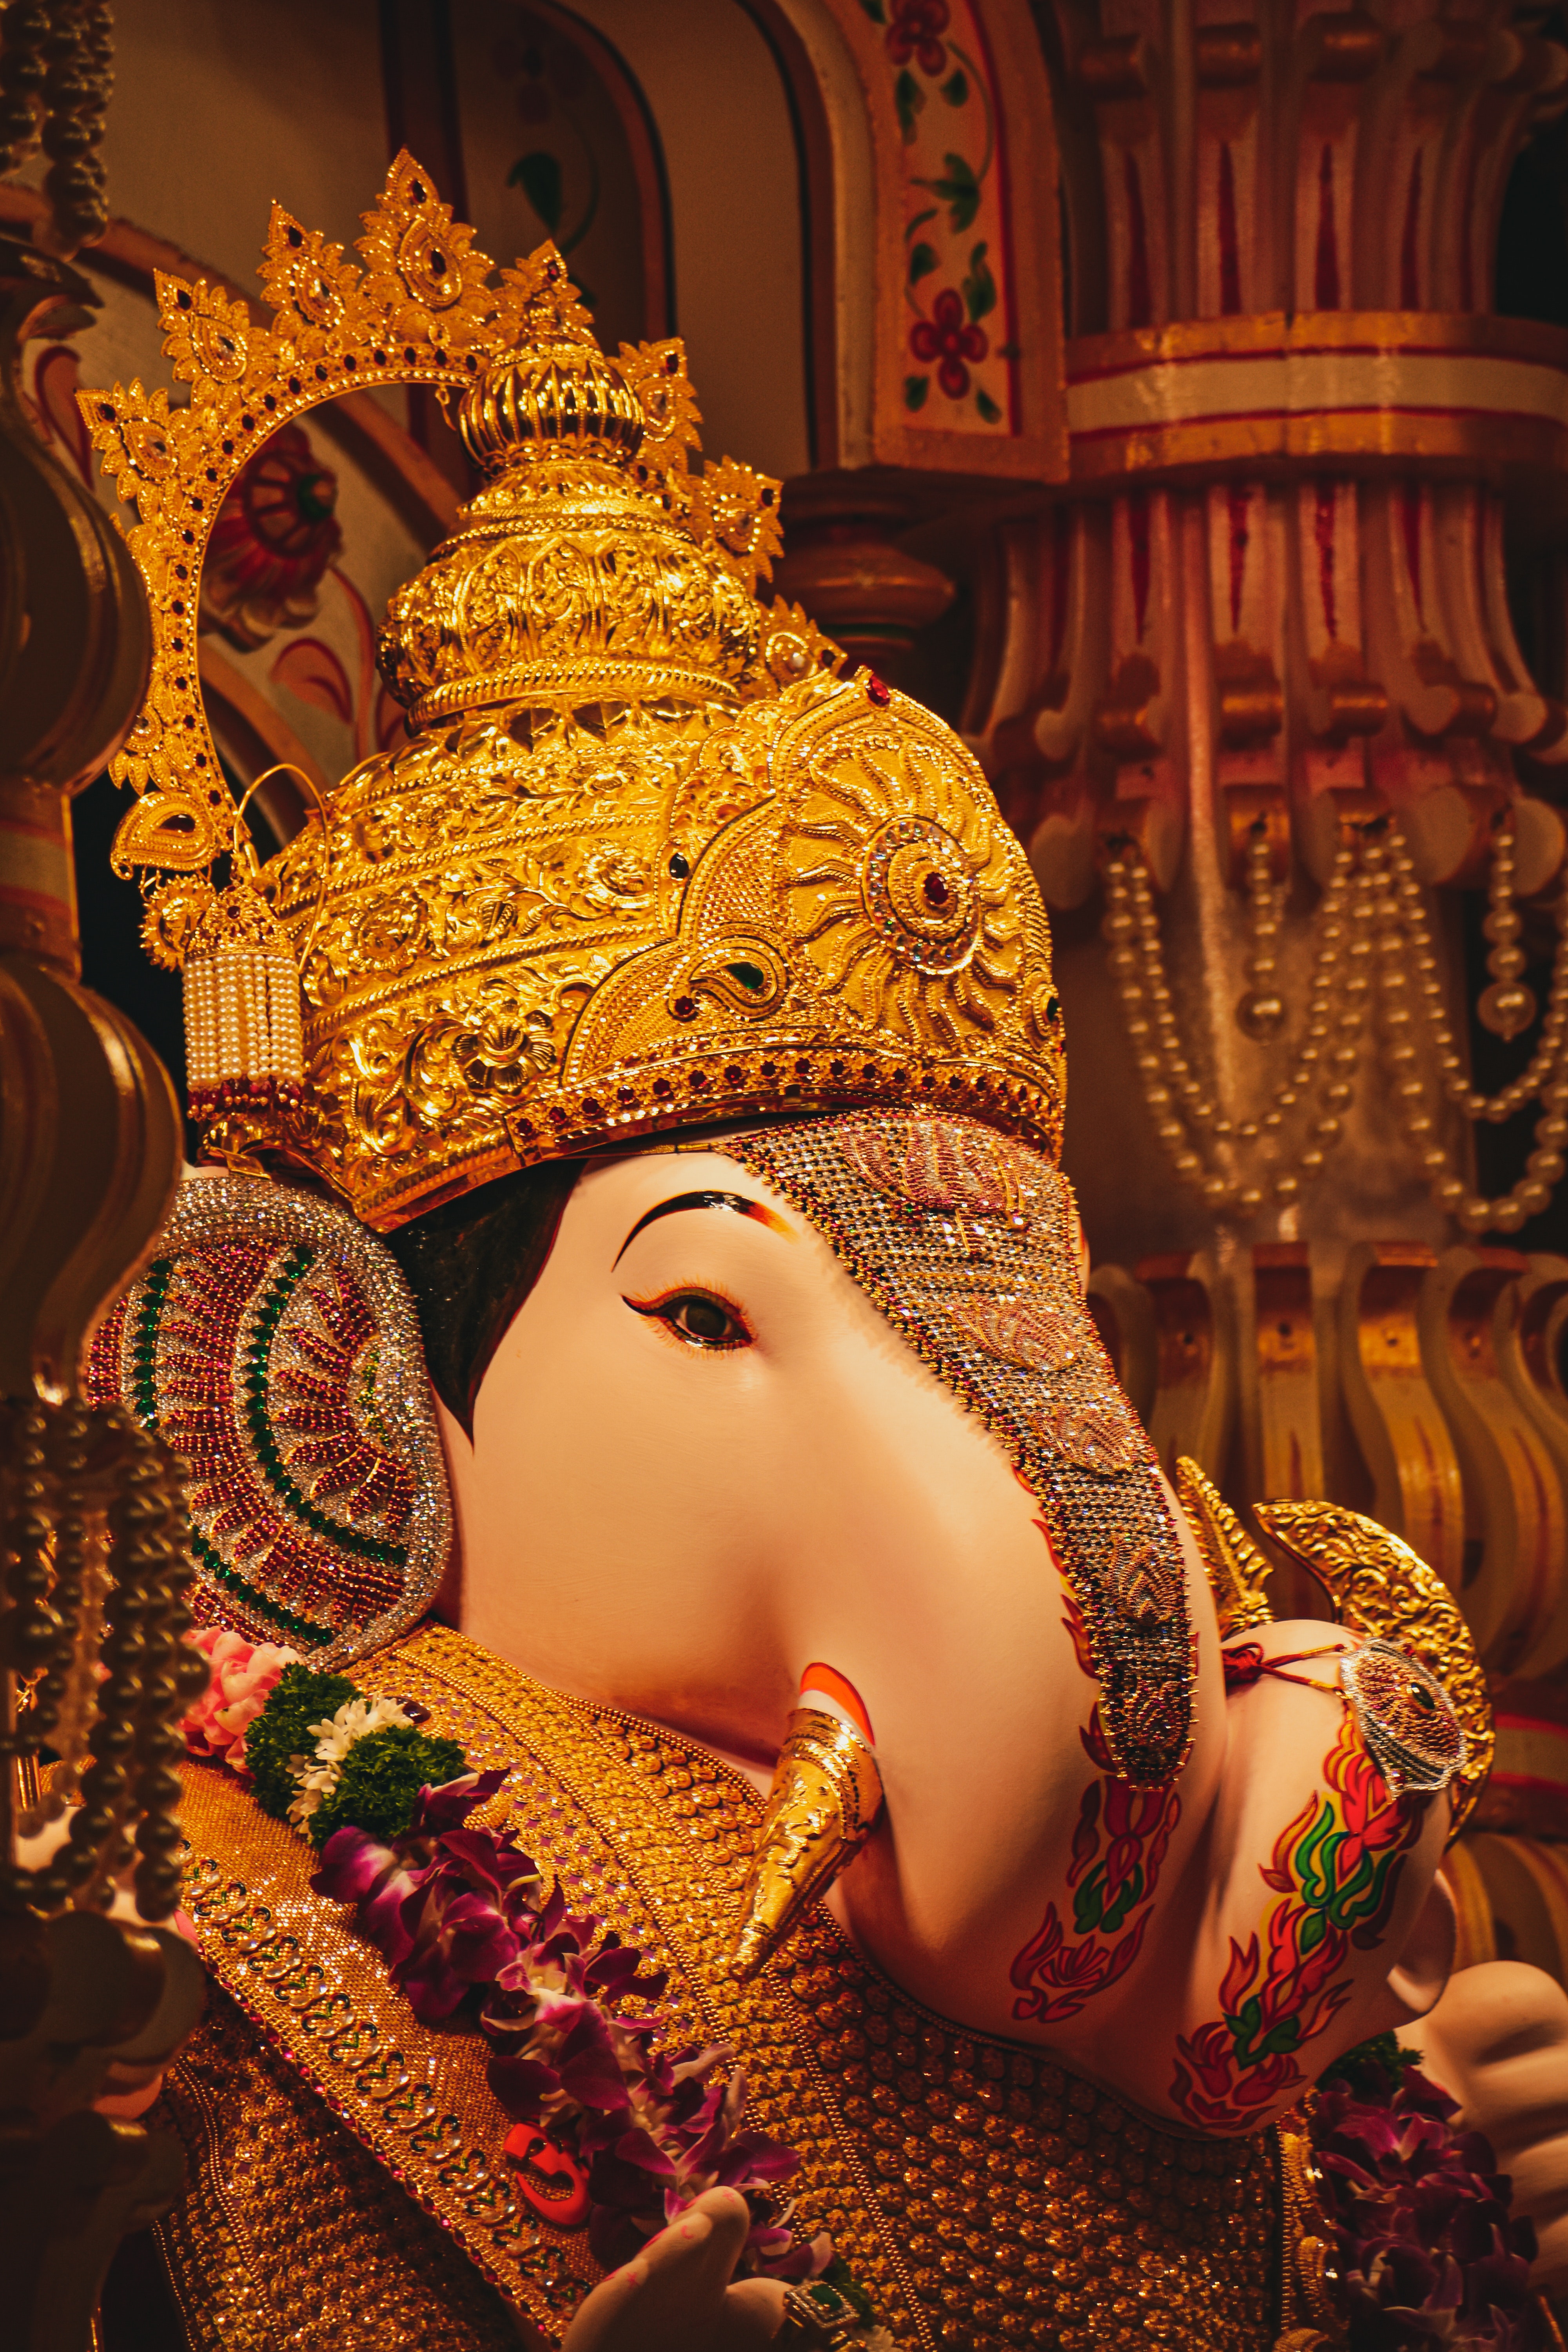 Ganesha photos download the best free ganesha stock photos hd images